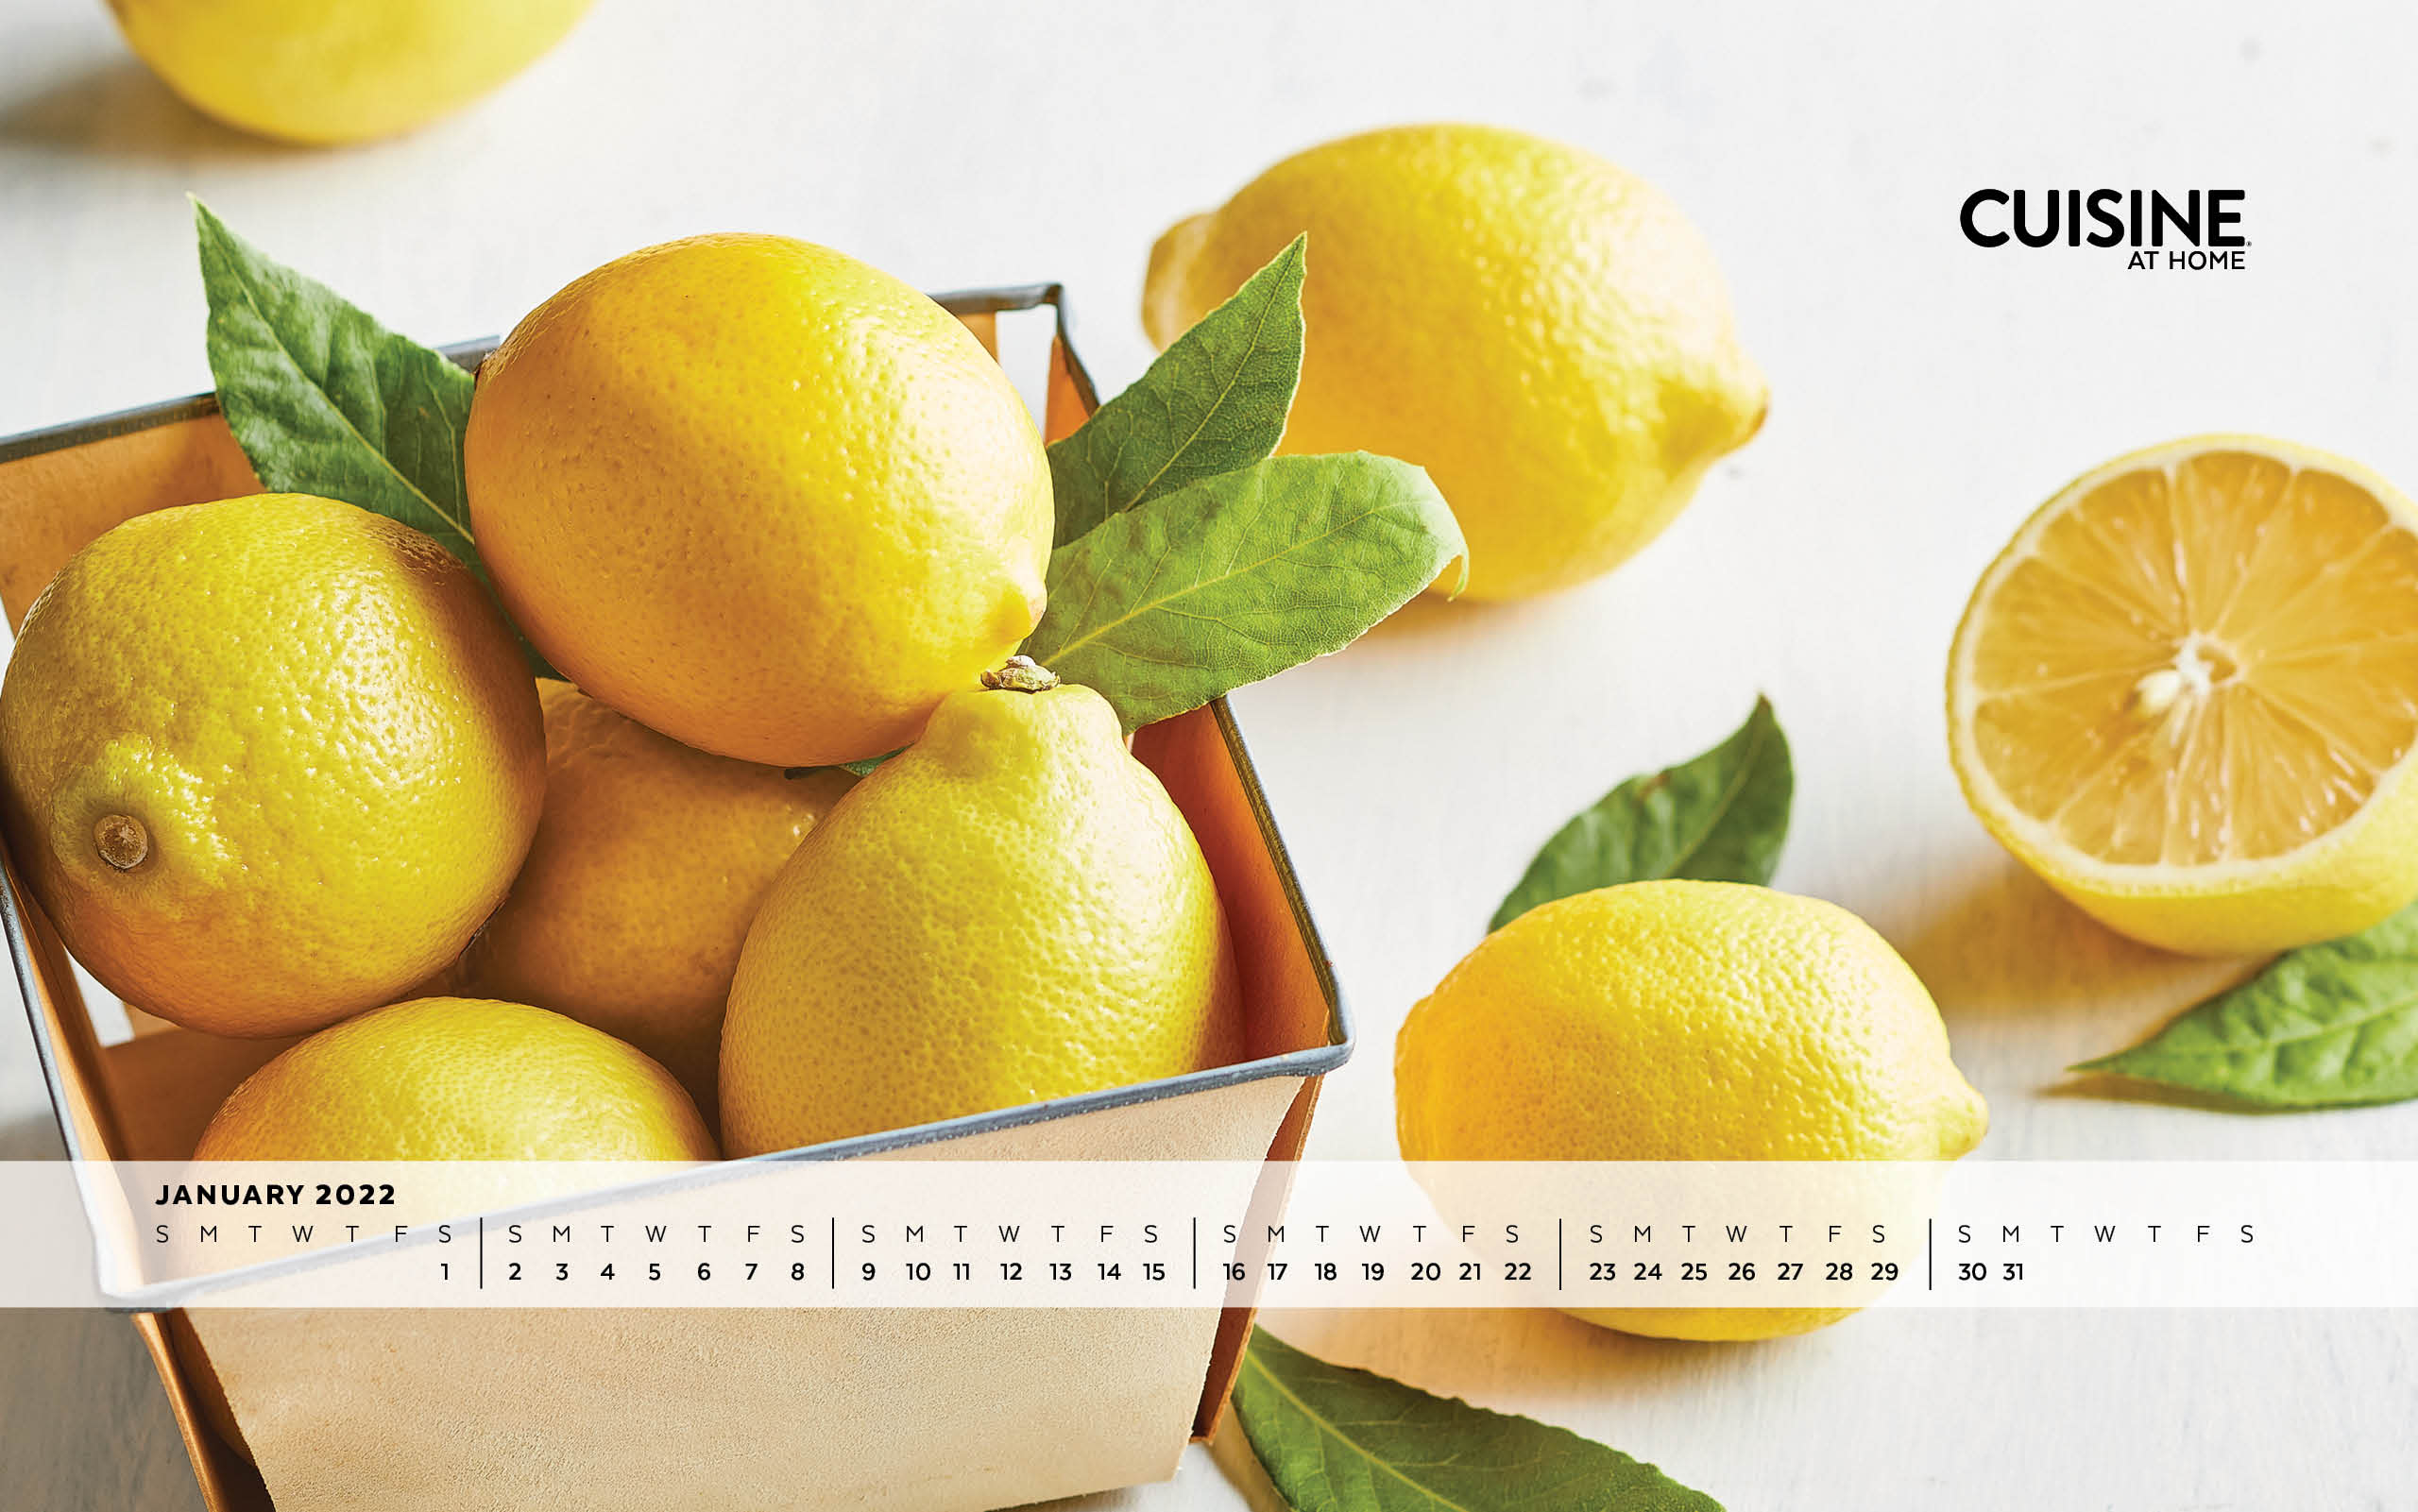 Free Desktop Wallpaper with calendar Windows Mac - January 2022 - Cuisine at Home - Winter new year aesthetic food cooking yellow lemons cheerful diet